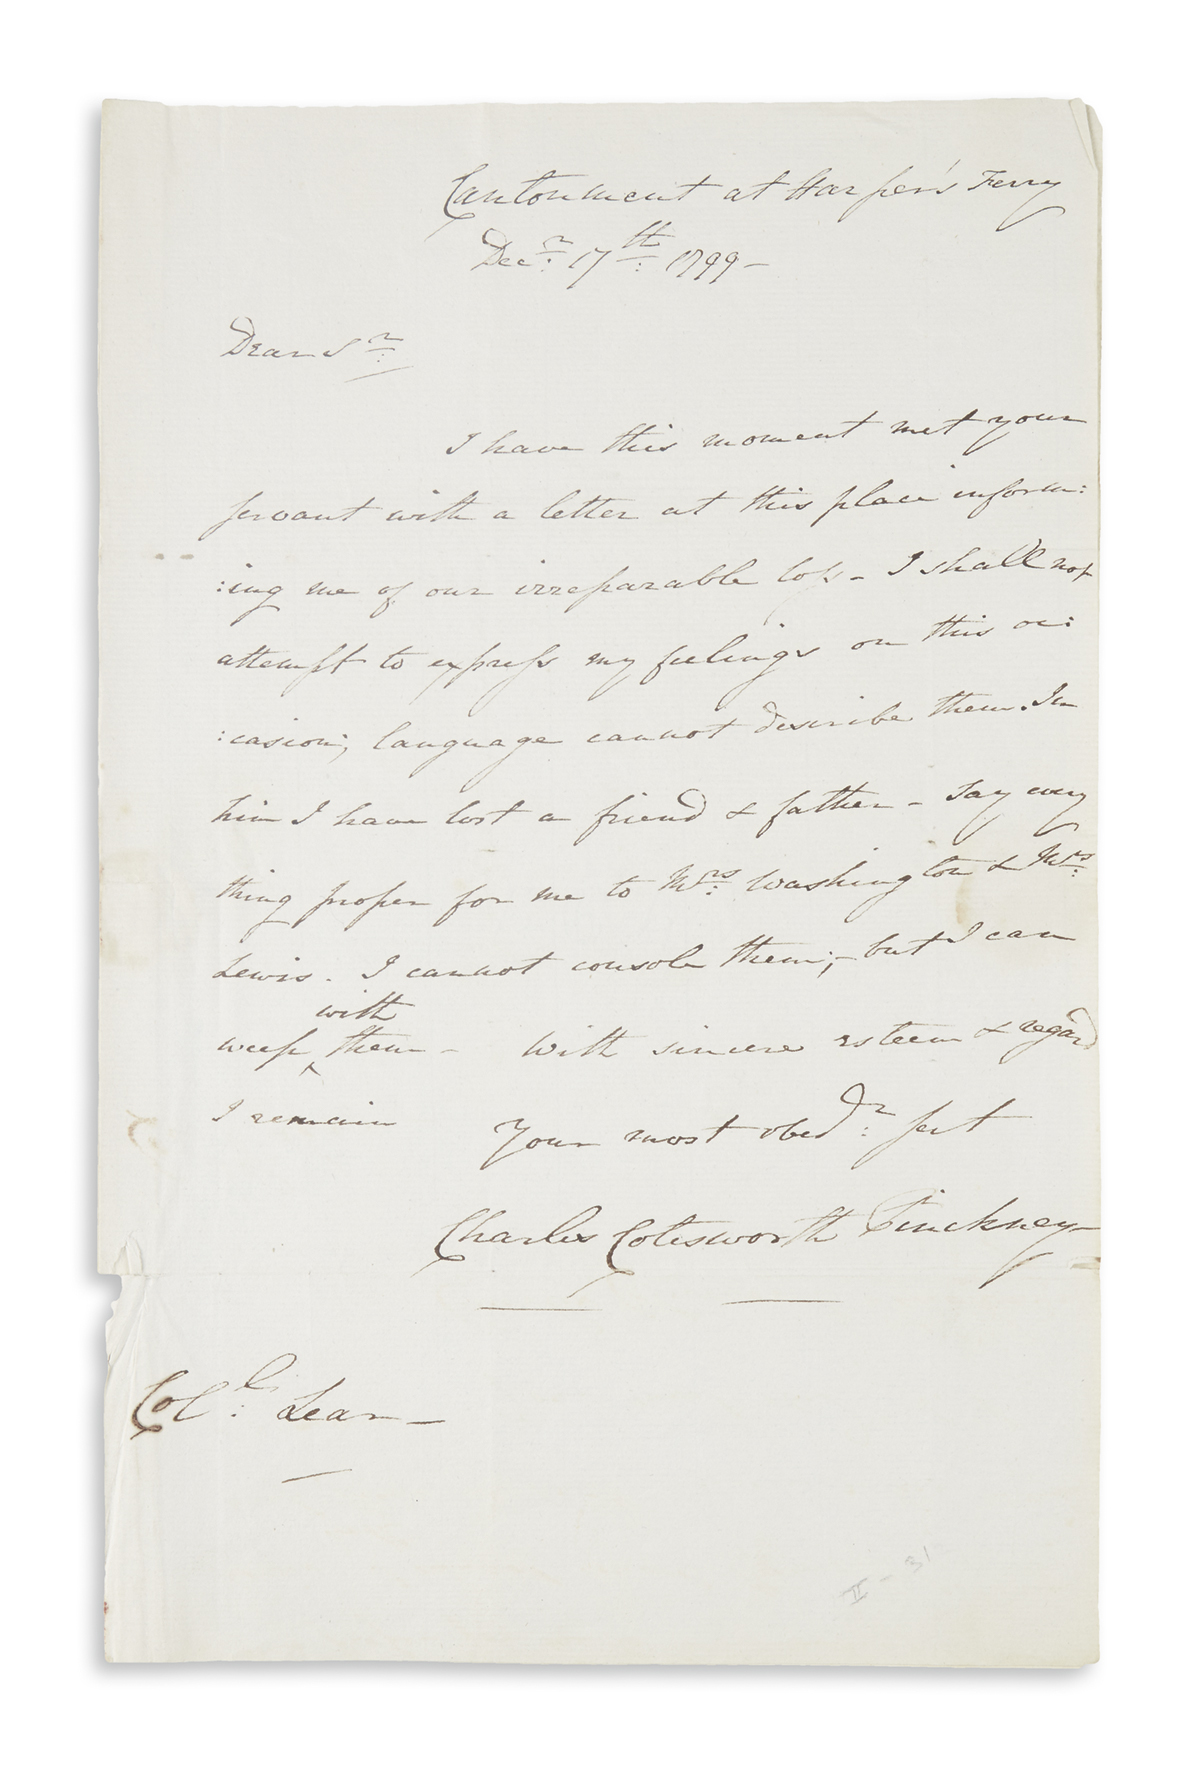 PINCKNEY, CHARLES COATESWORTH. Autograph Letter Signed, to Washingtons personal secretary Tobias Lear,